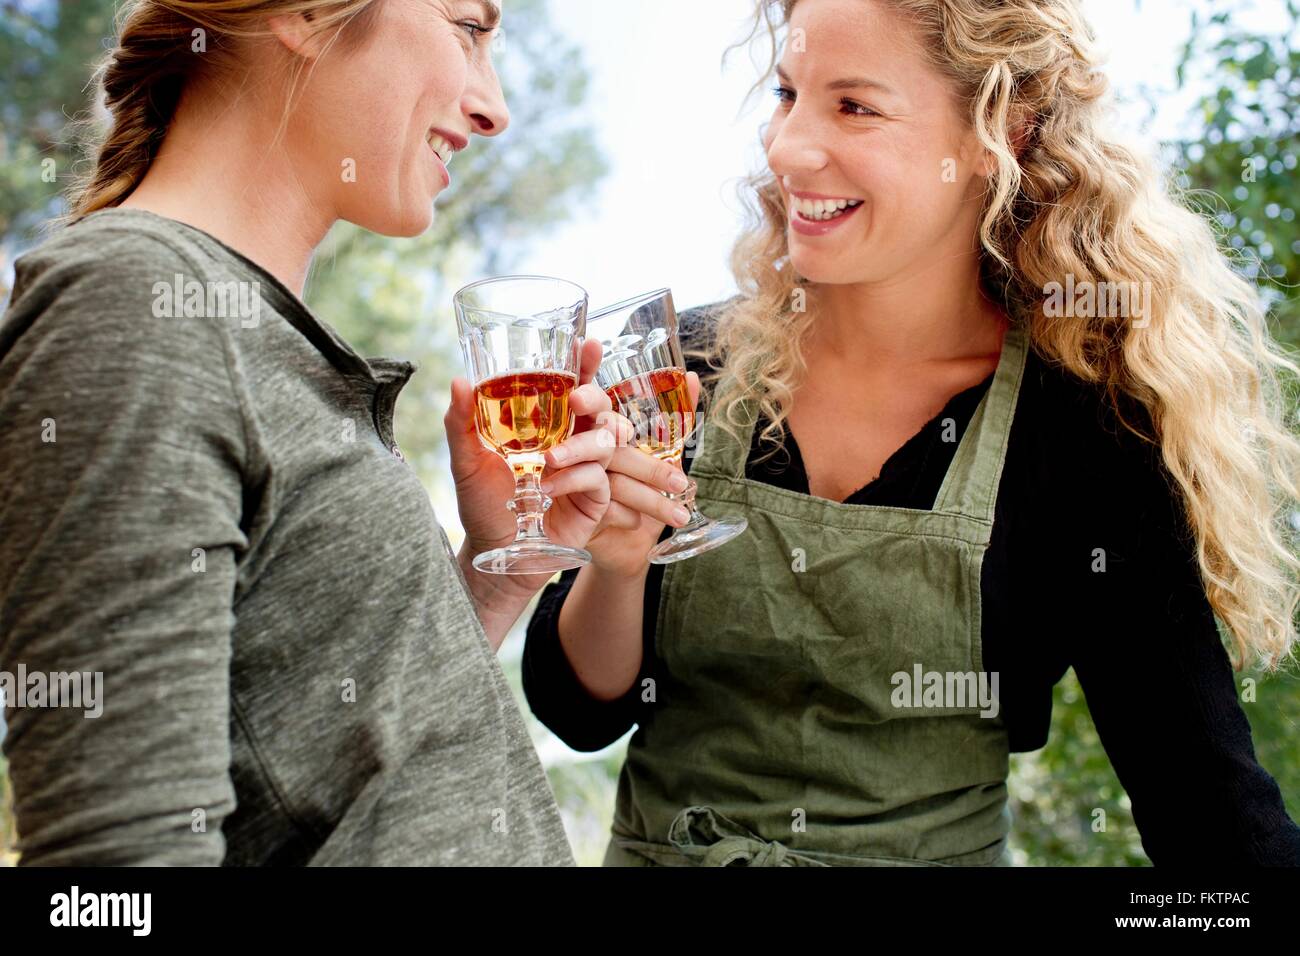 Deux femmes toasting with wine glasses Banque D'Images